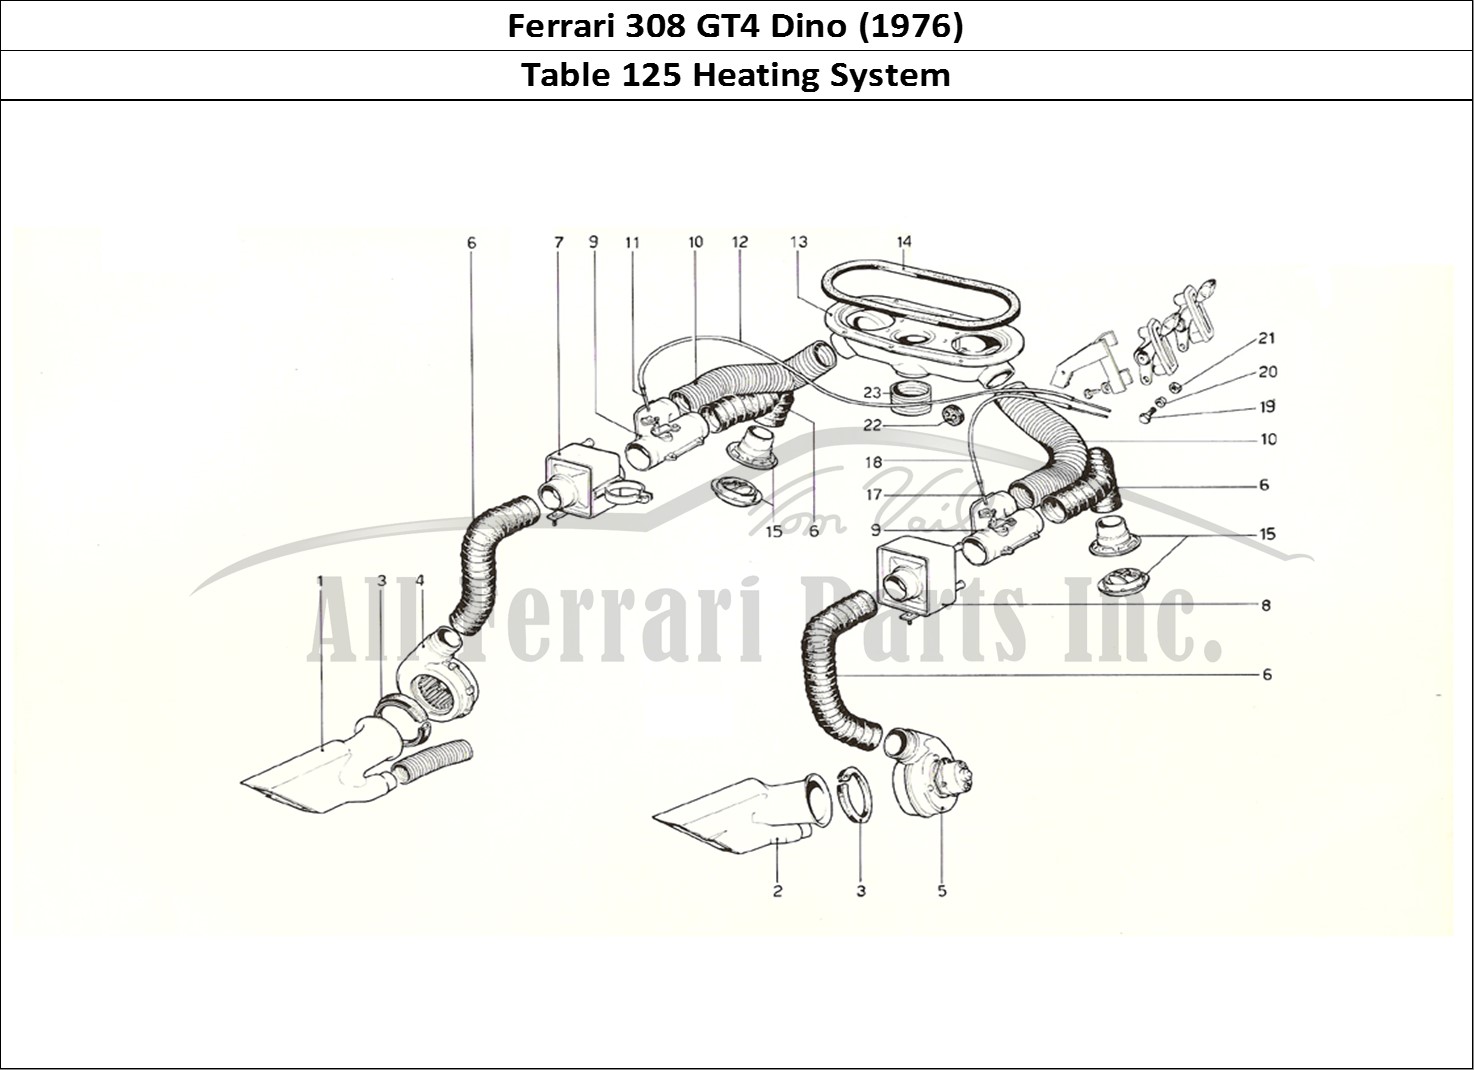 Ferrari Parts Ferrari 308 GT4 Dino (1976) Page 125 Heating system